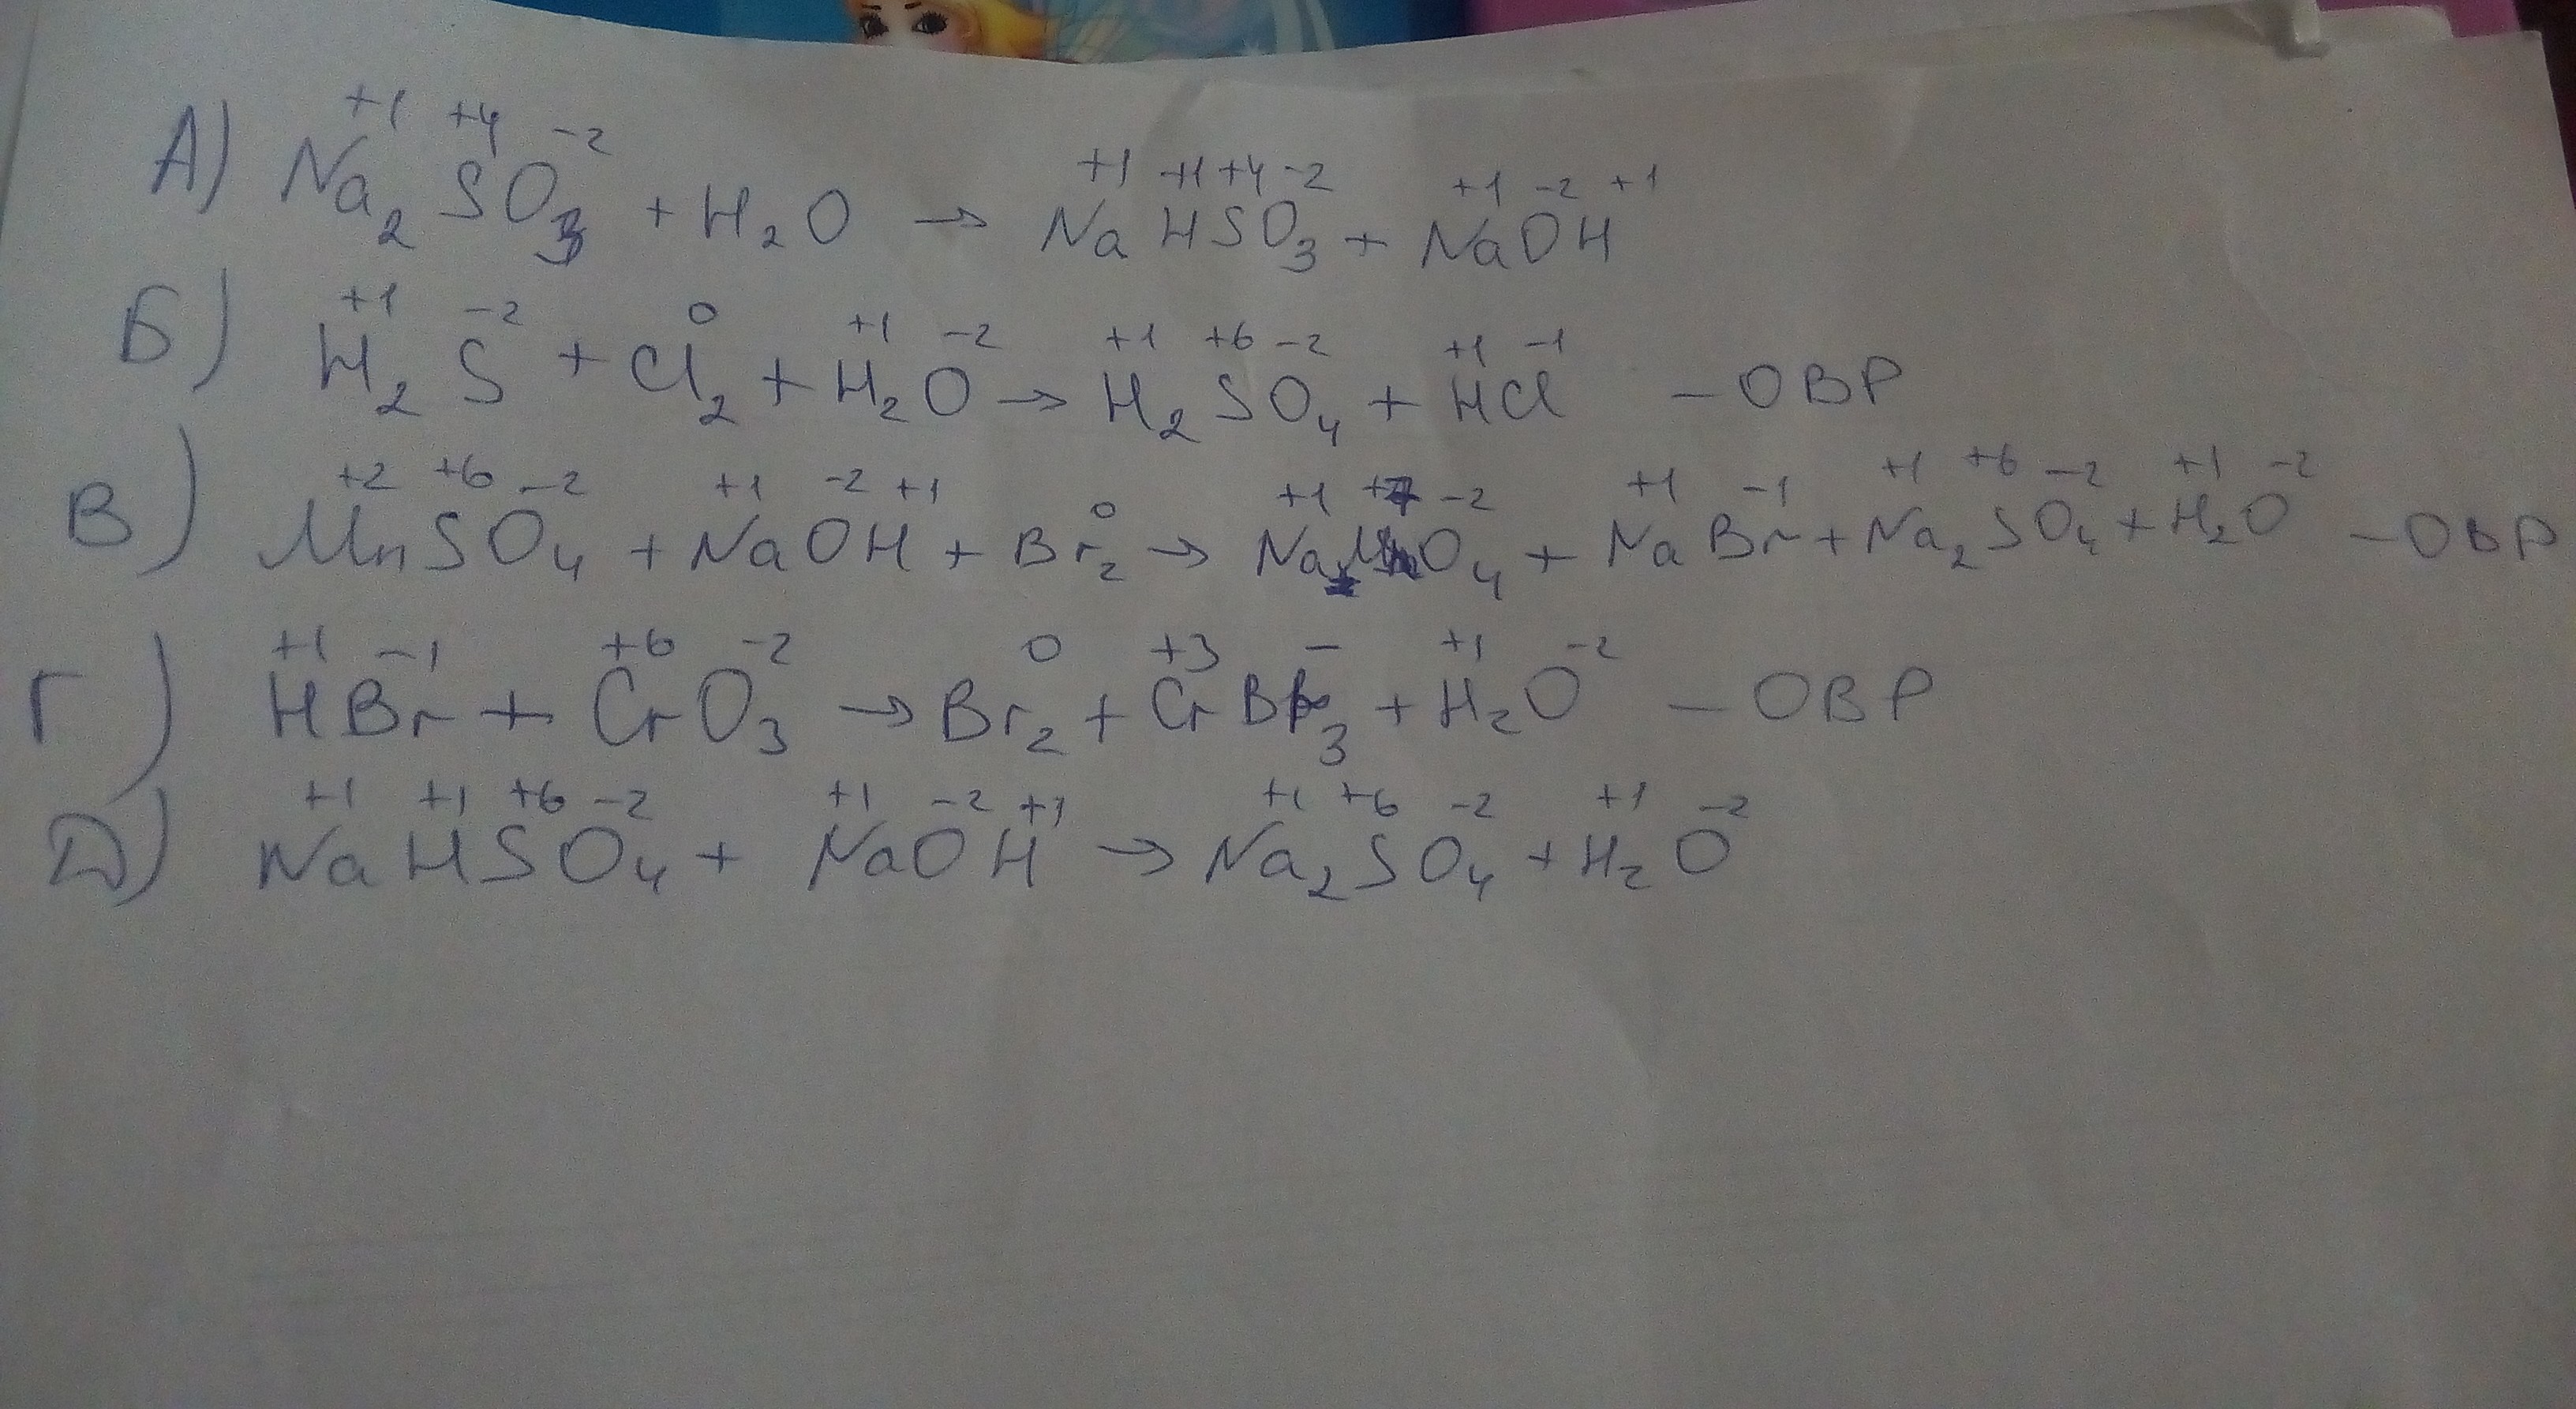 Crbr3 k2so3. Определите степень окисления элементов nahso3. Nahso4 + CA(Oh)2. So2 nahso3 уравнение. Nabr h2so4 br2 h2o nahso4 so2.